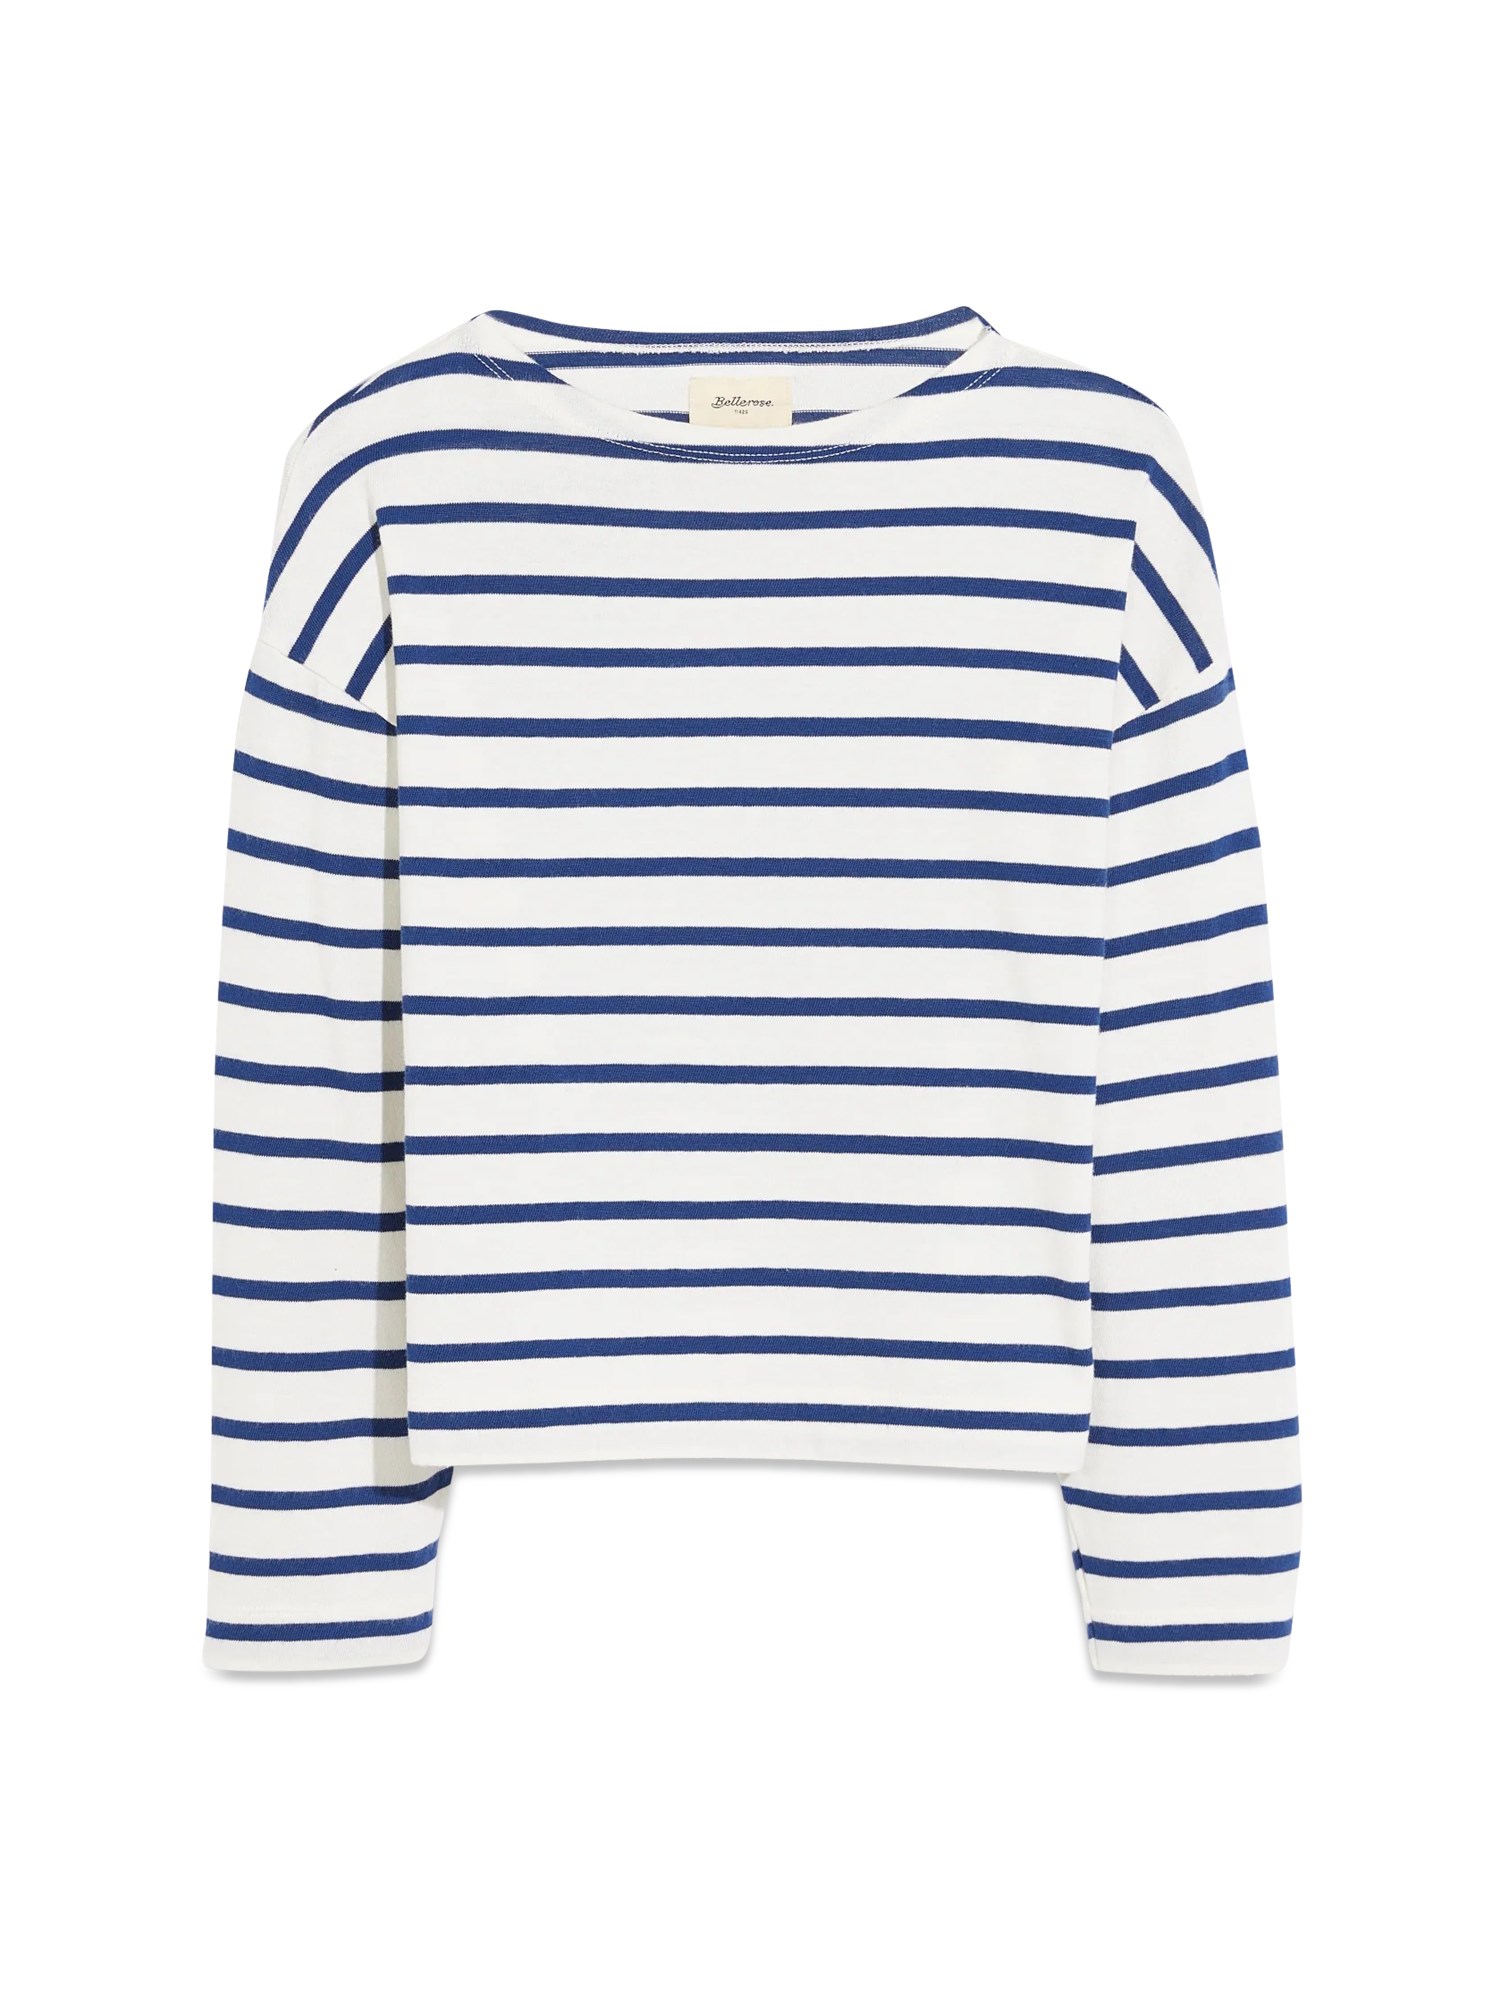 bellerose striped t-shirt